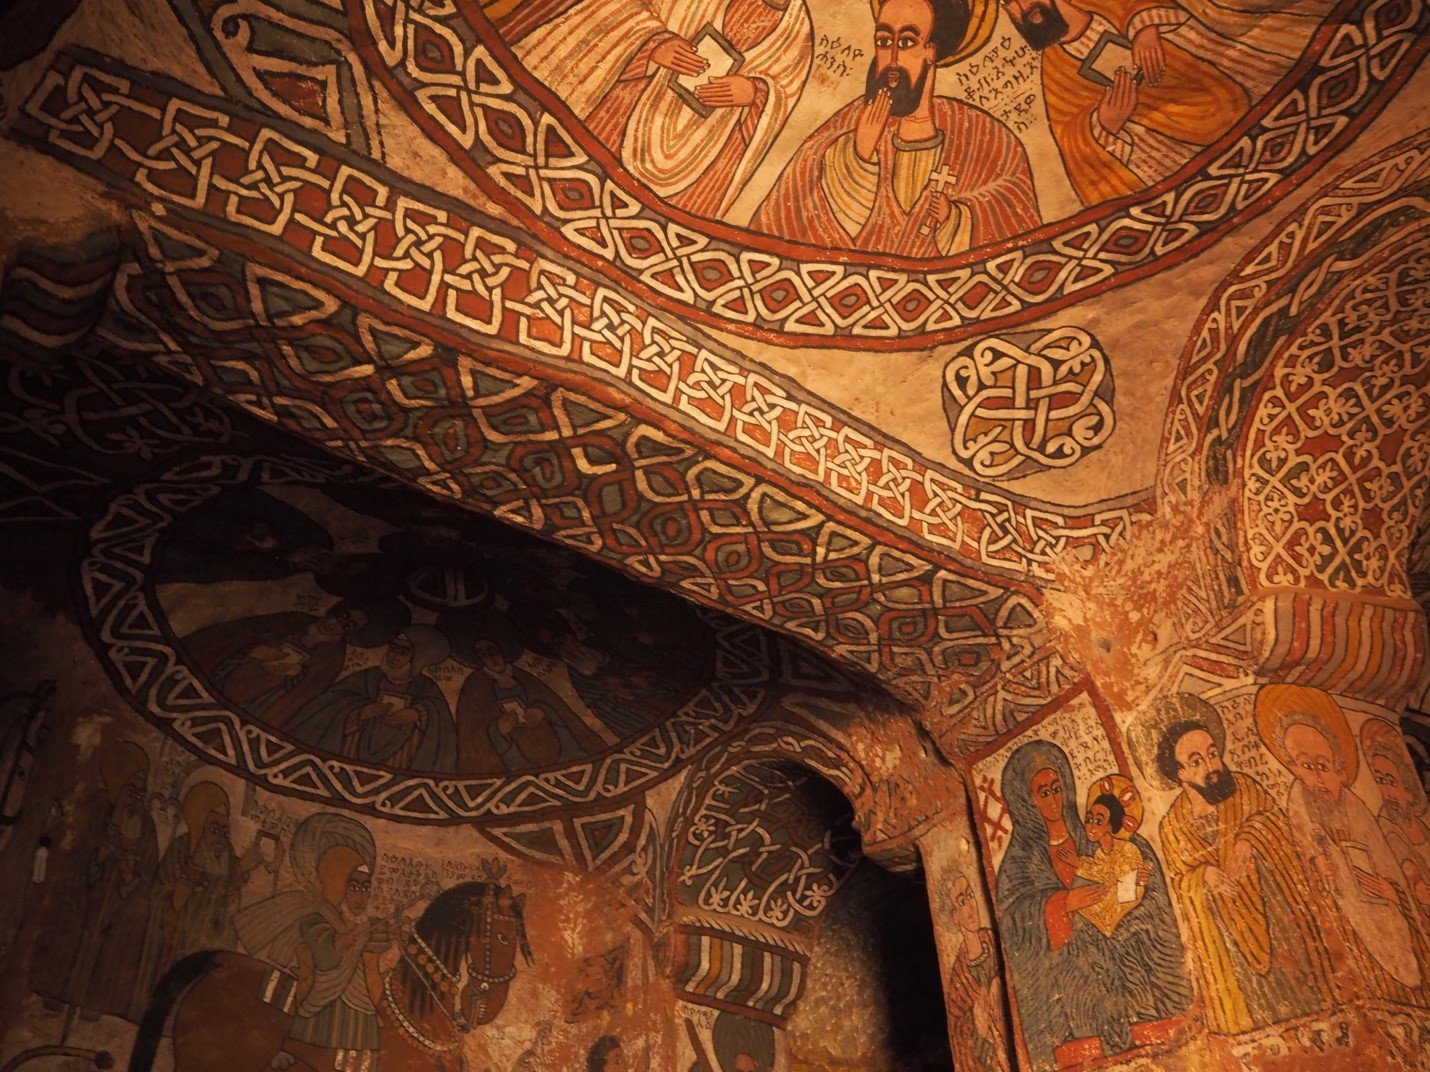  Interior walls of the largest church in the Gheralta range, Abuna Yemata Guh. 